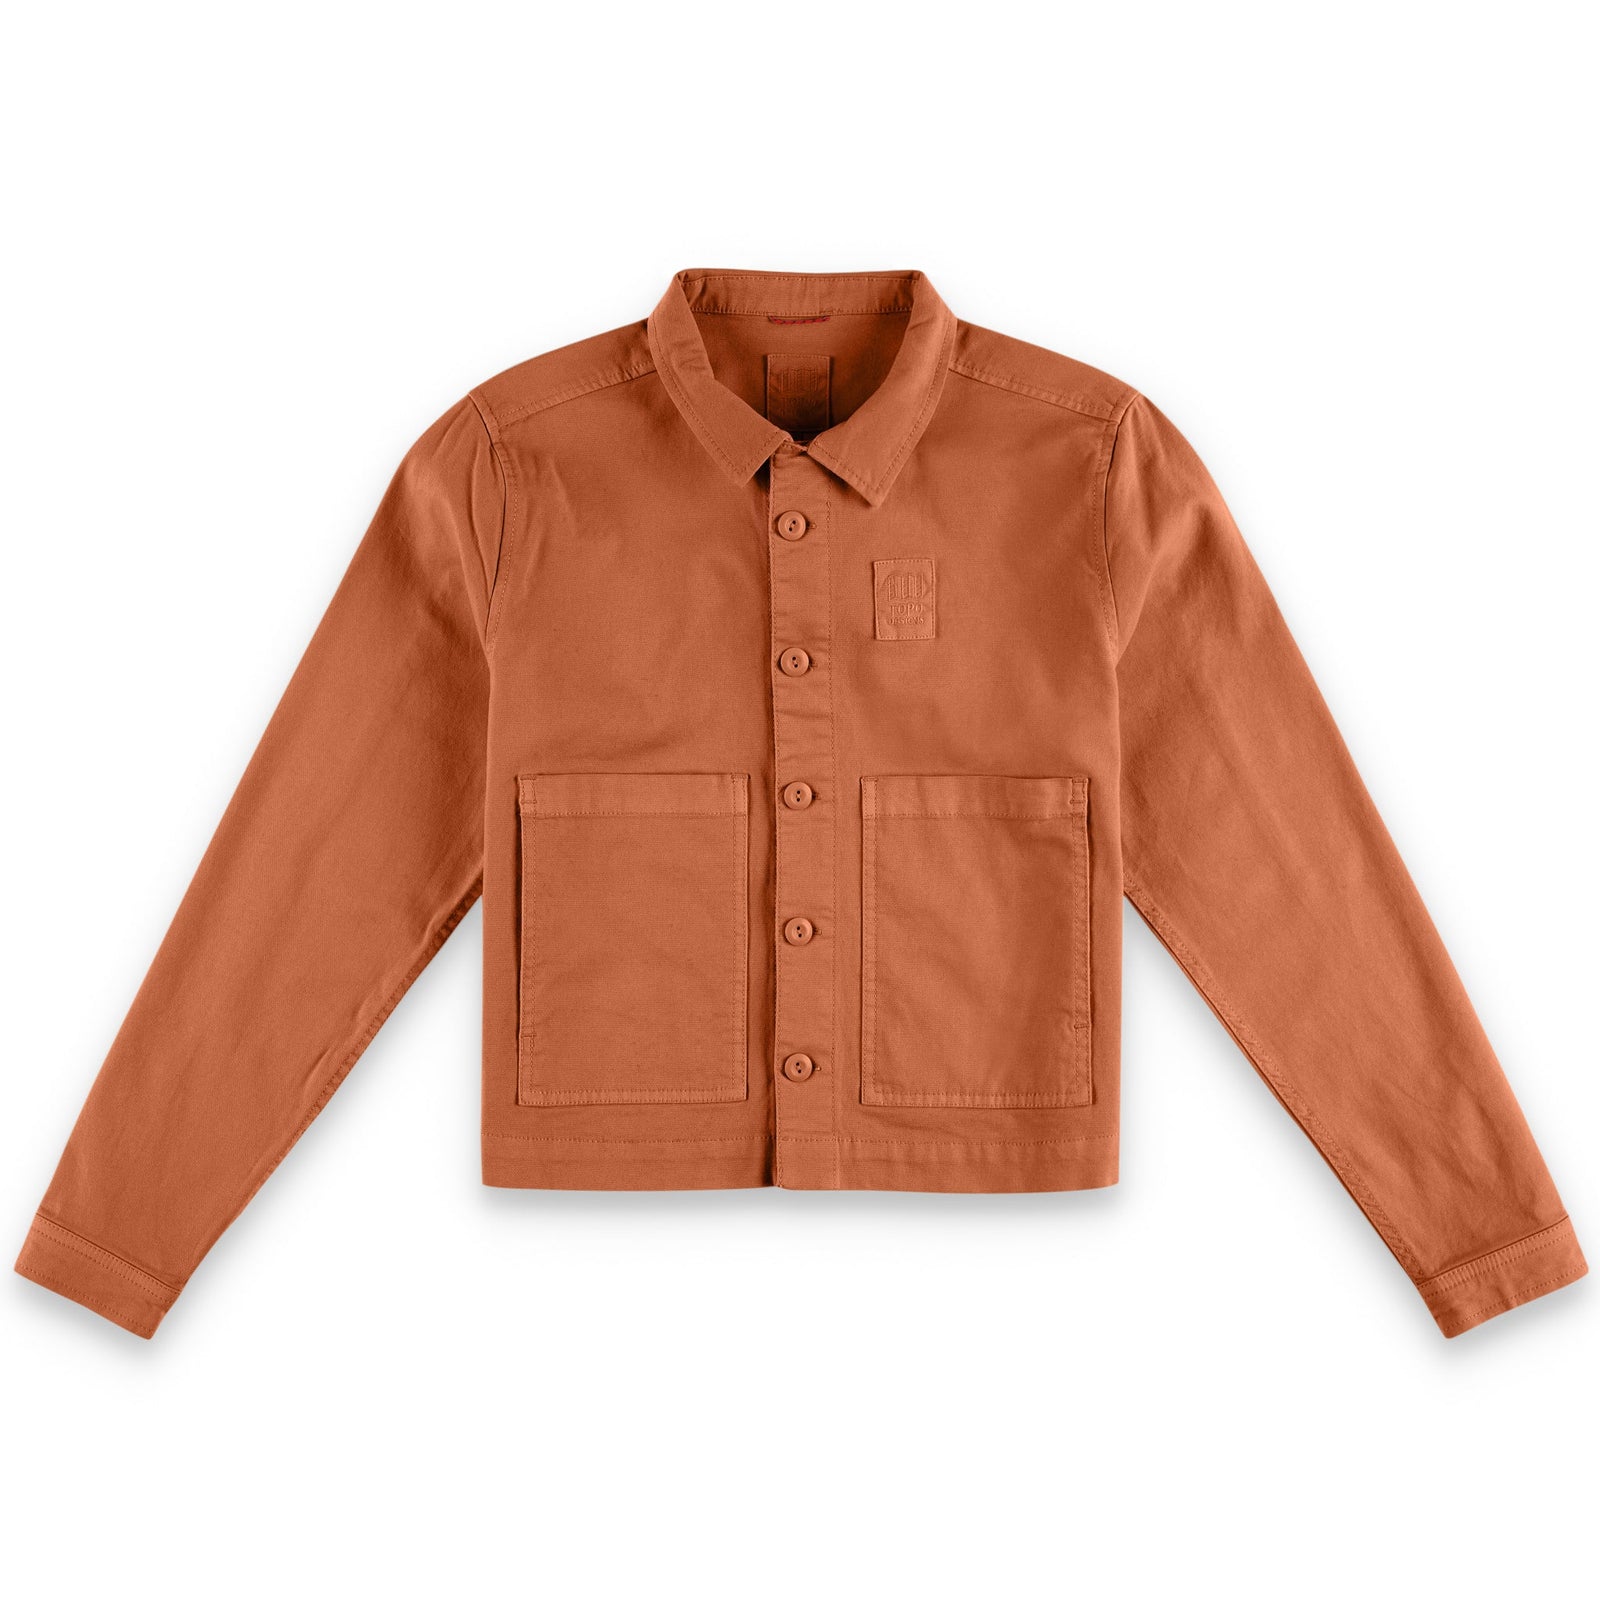 Topo Designs Women's Dirt Jacket 100% organic cotton shirt jacket in "brick" orange